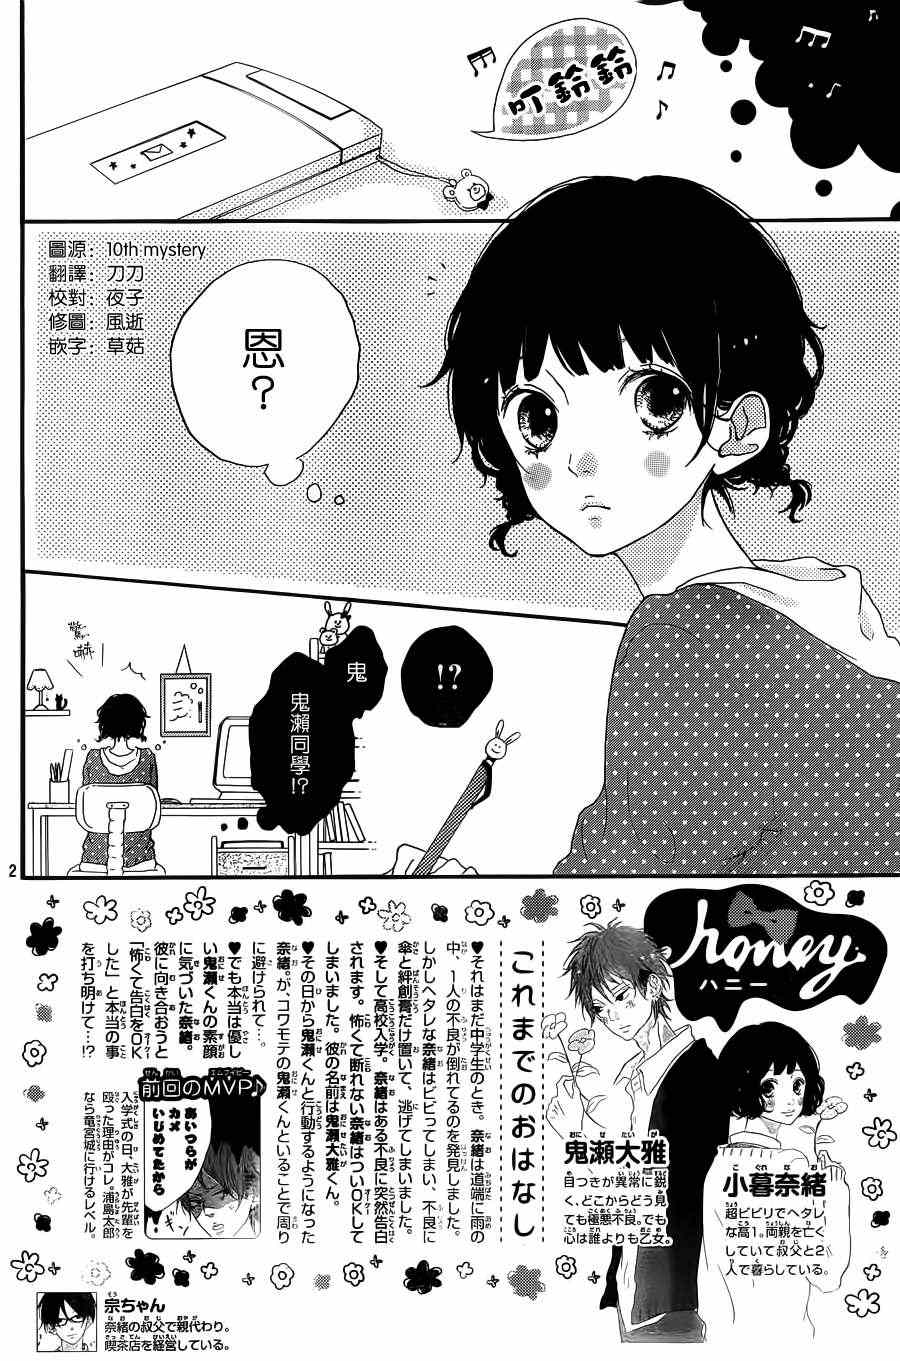 《Honey》漫画 002集